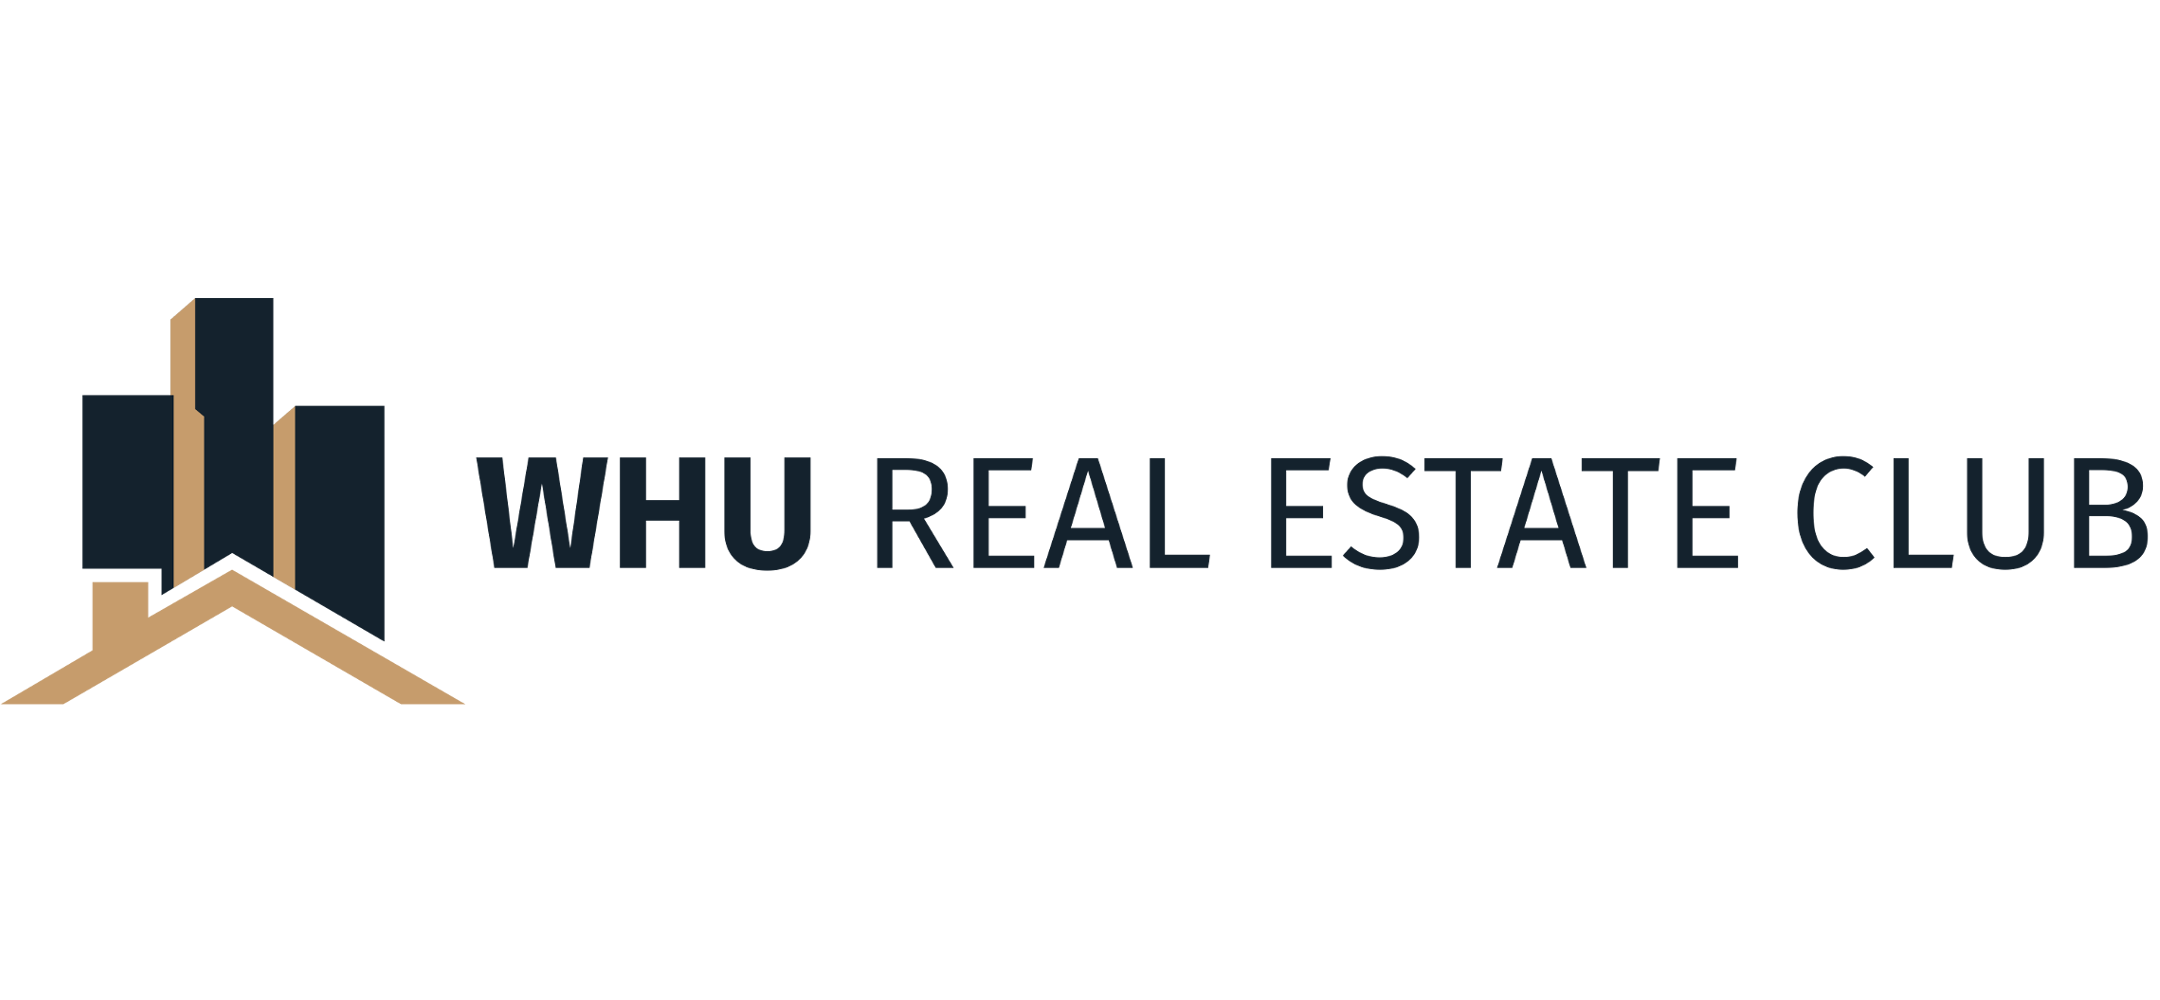 WHU Real Estate Club